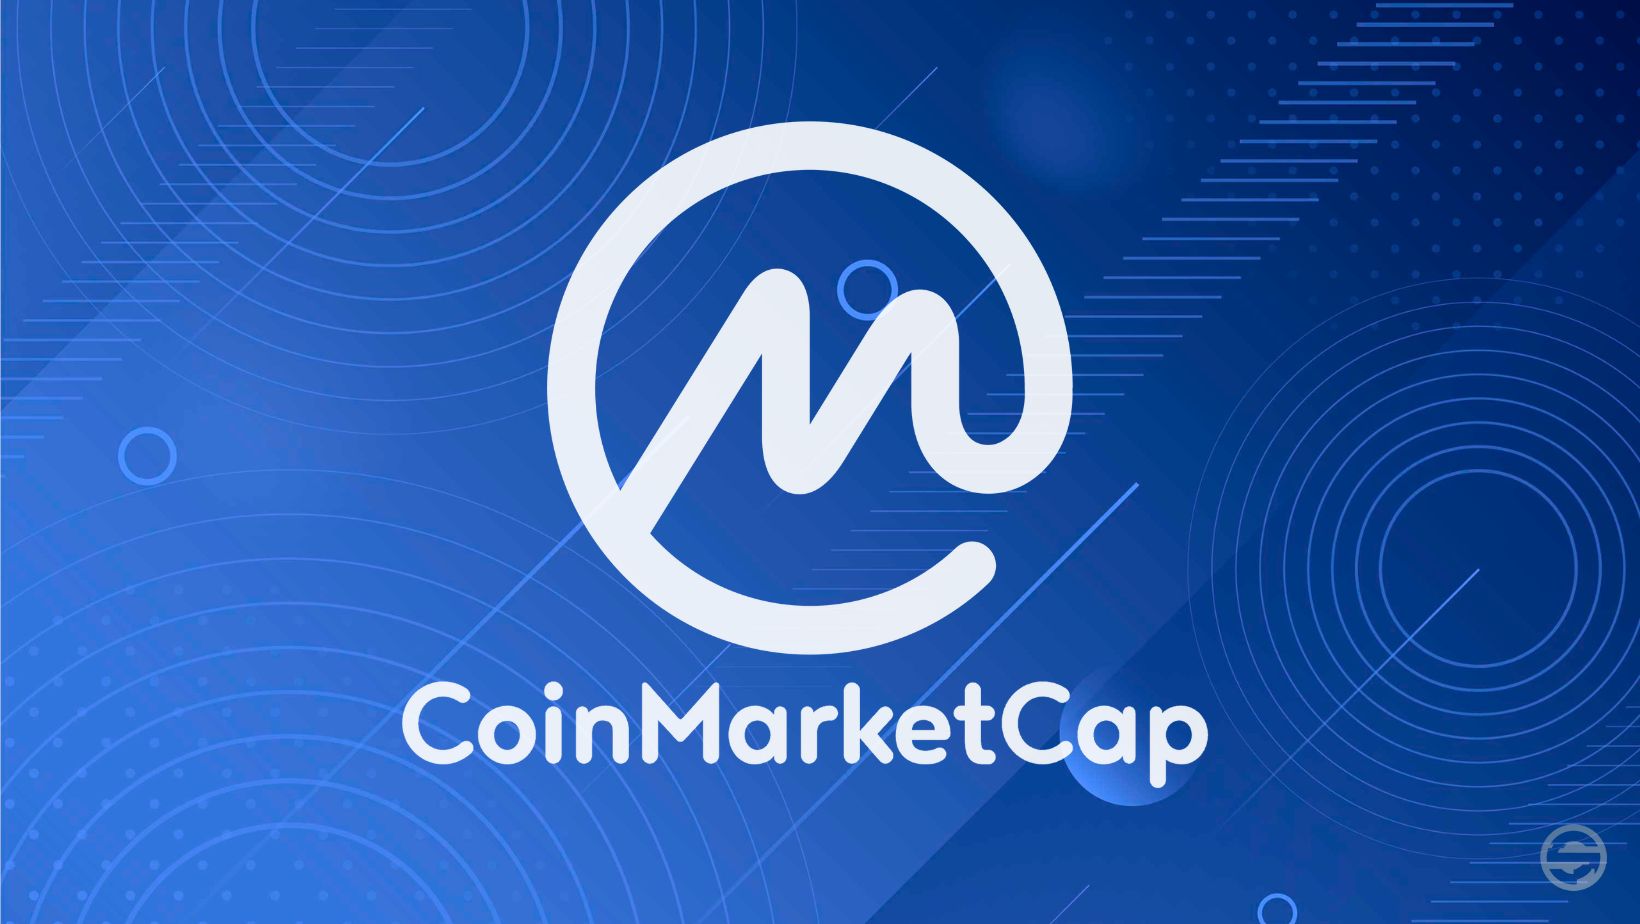 Coinmarketcap: The go to platform for crypto investors